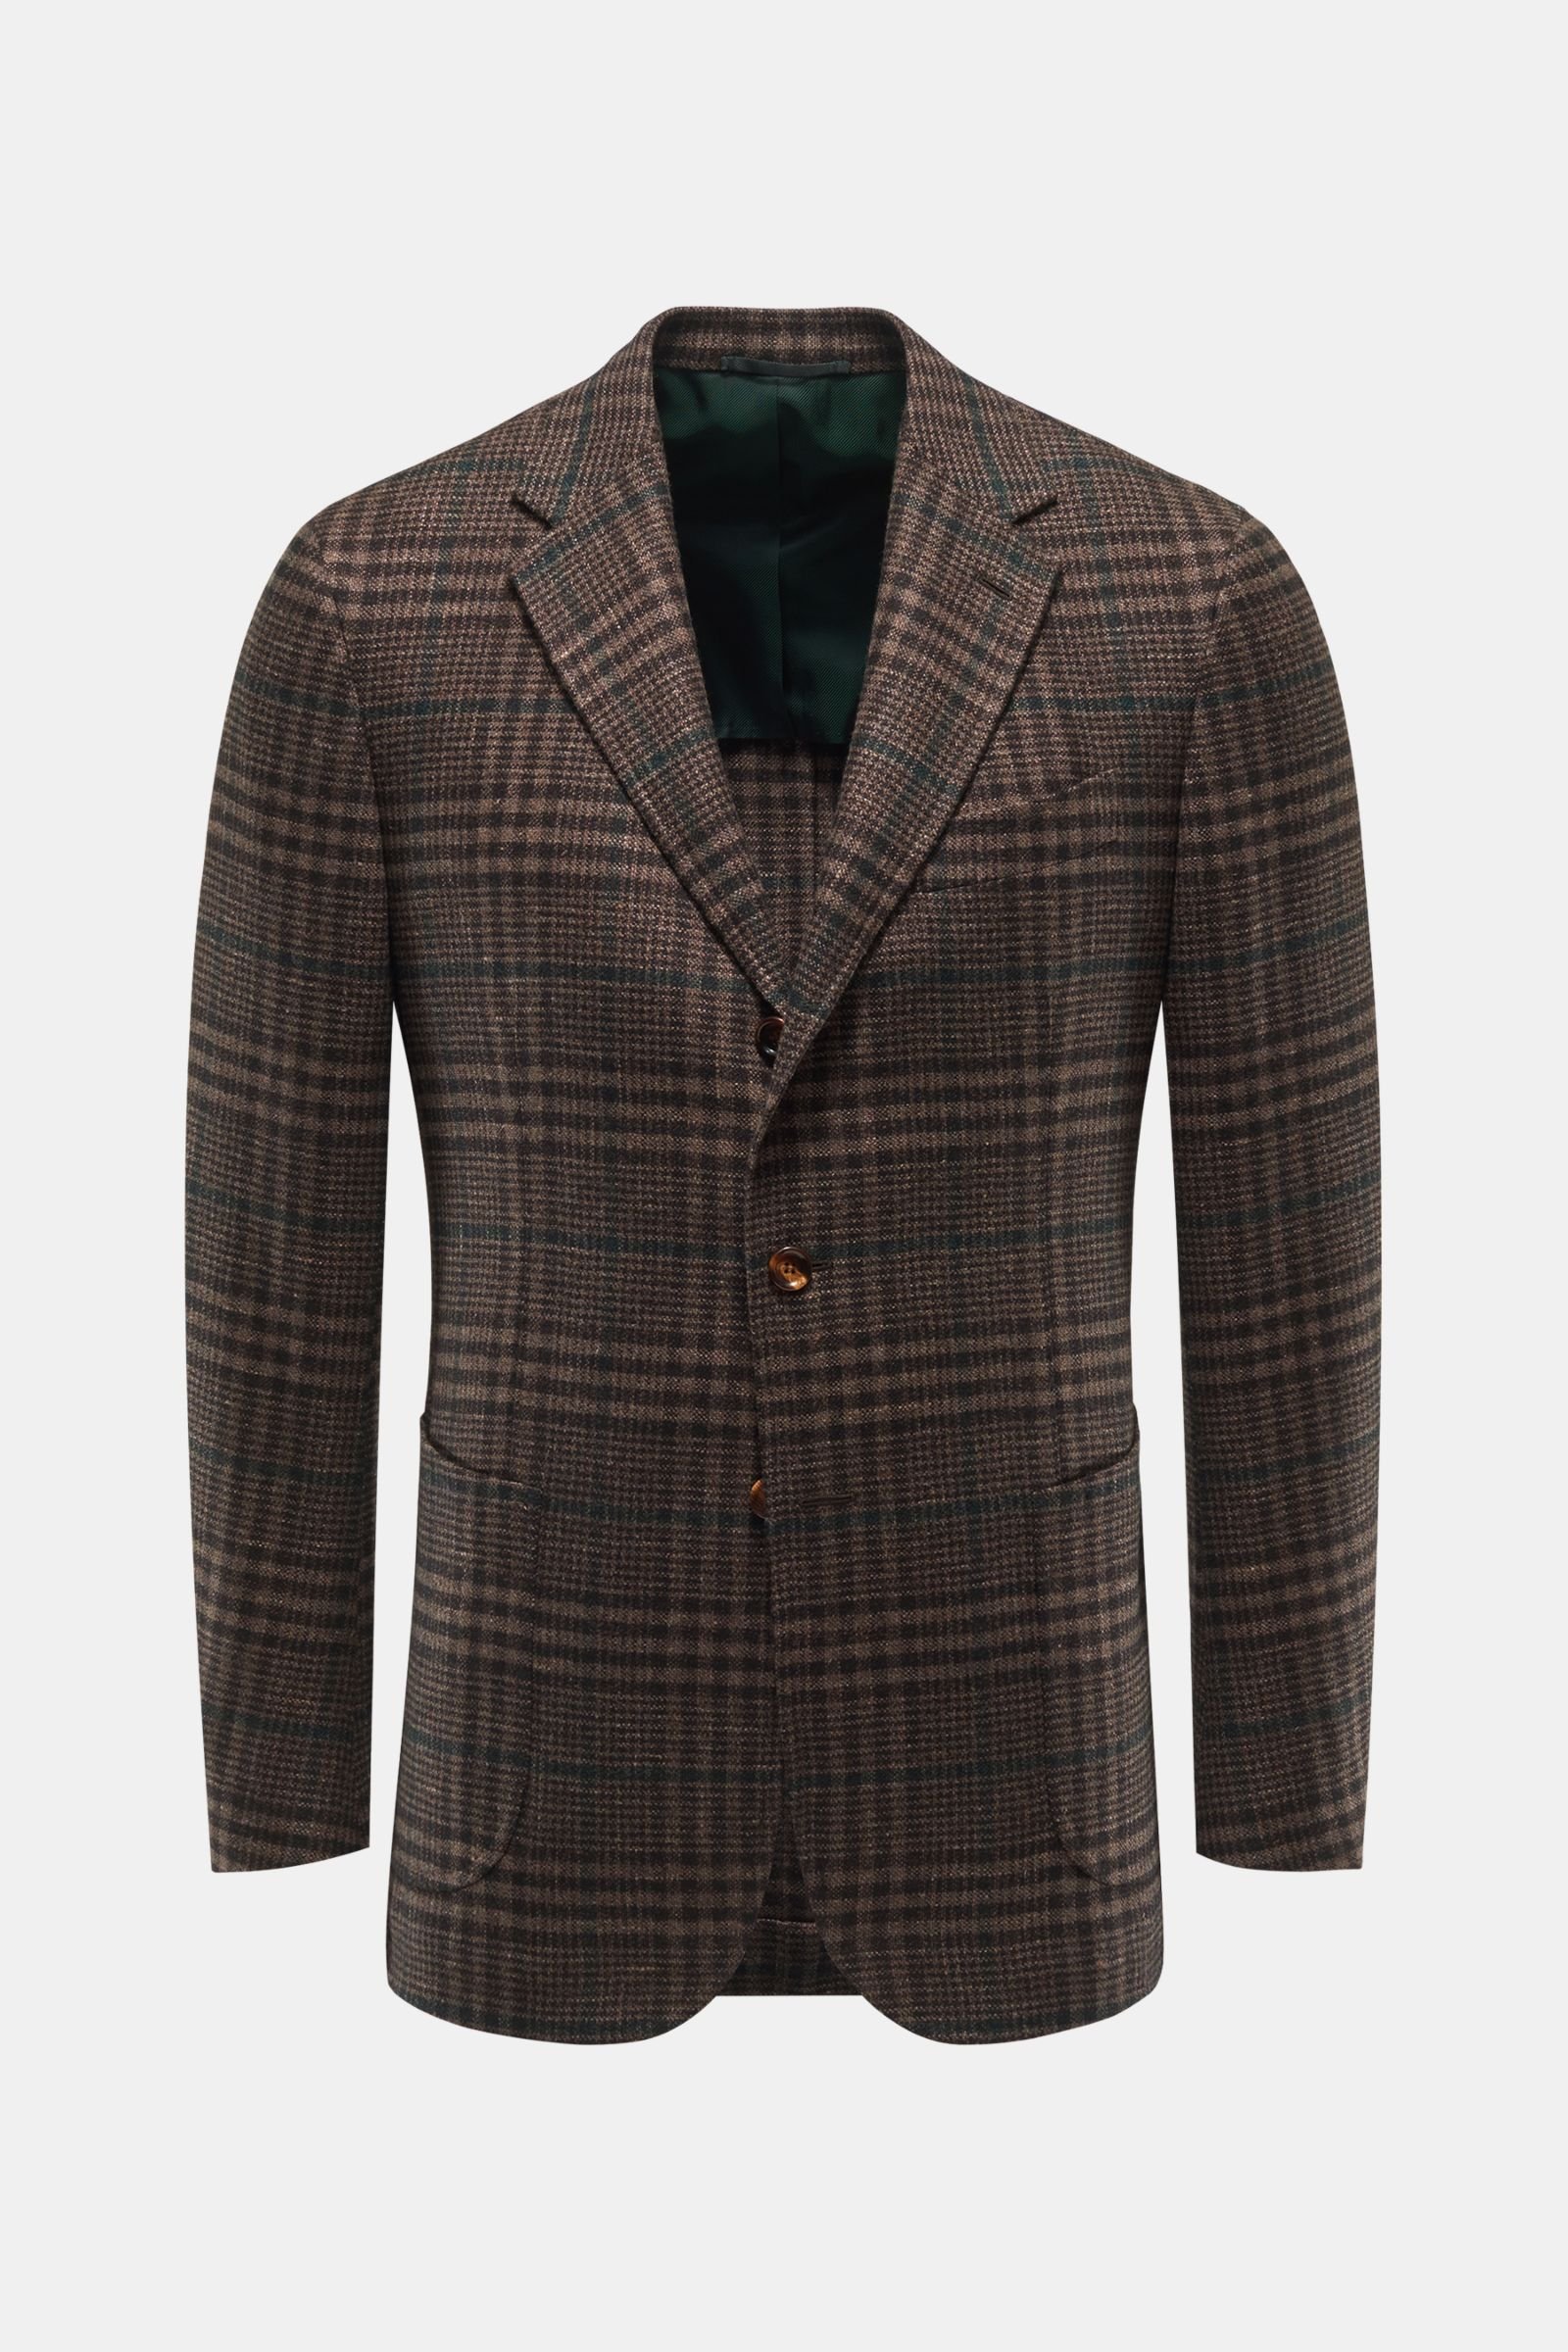 Smart-casual jacket 'Vincenzo' dark brown/dark green checked